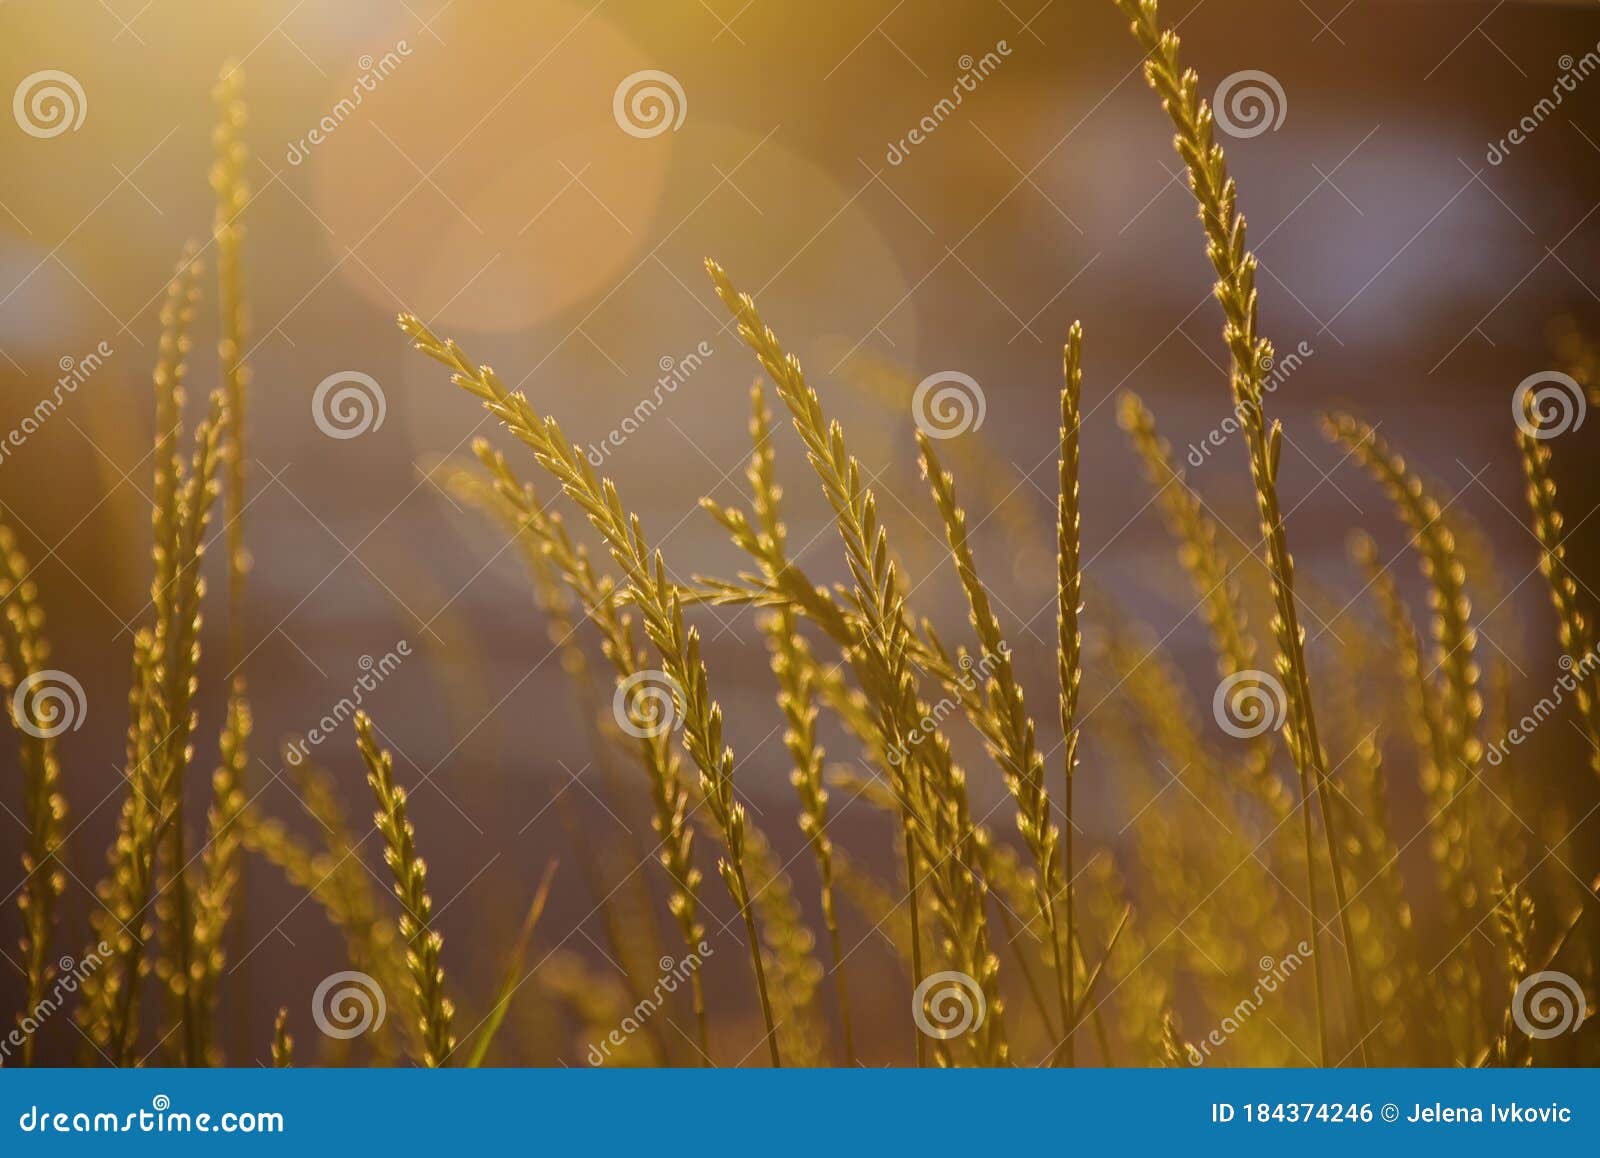 Beautiful Golden Grass Field at Sunset. Selective Focus Stock Photo